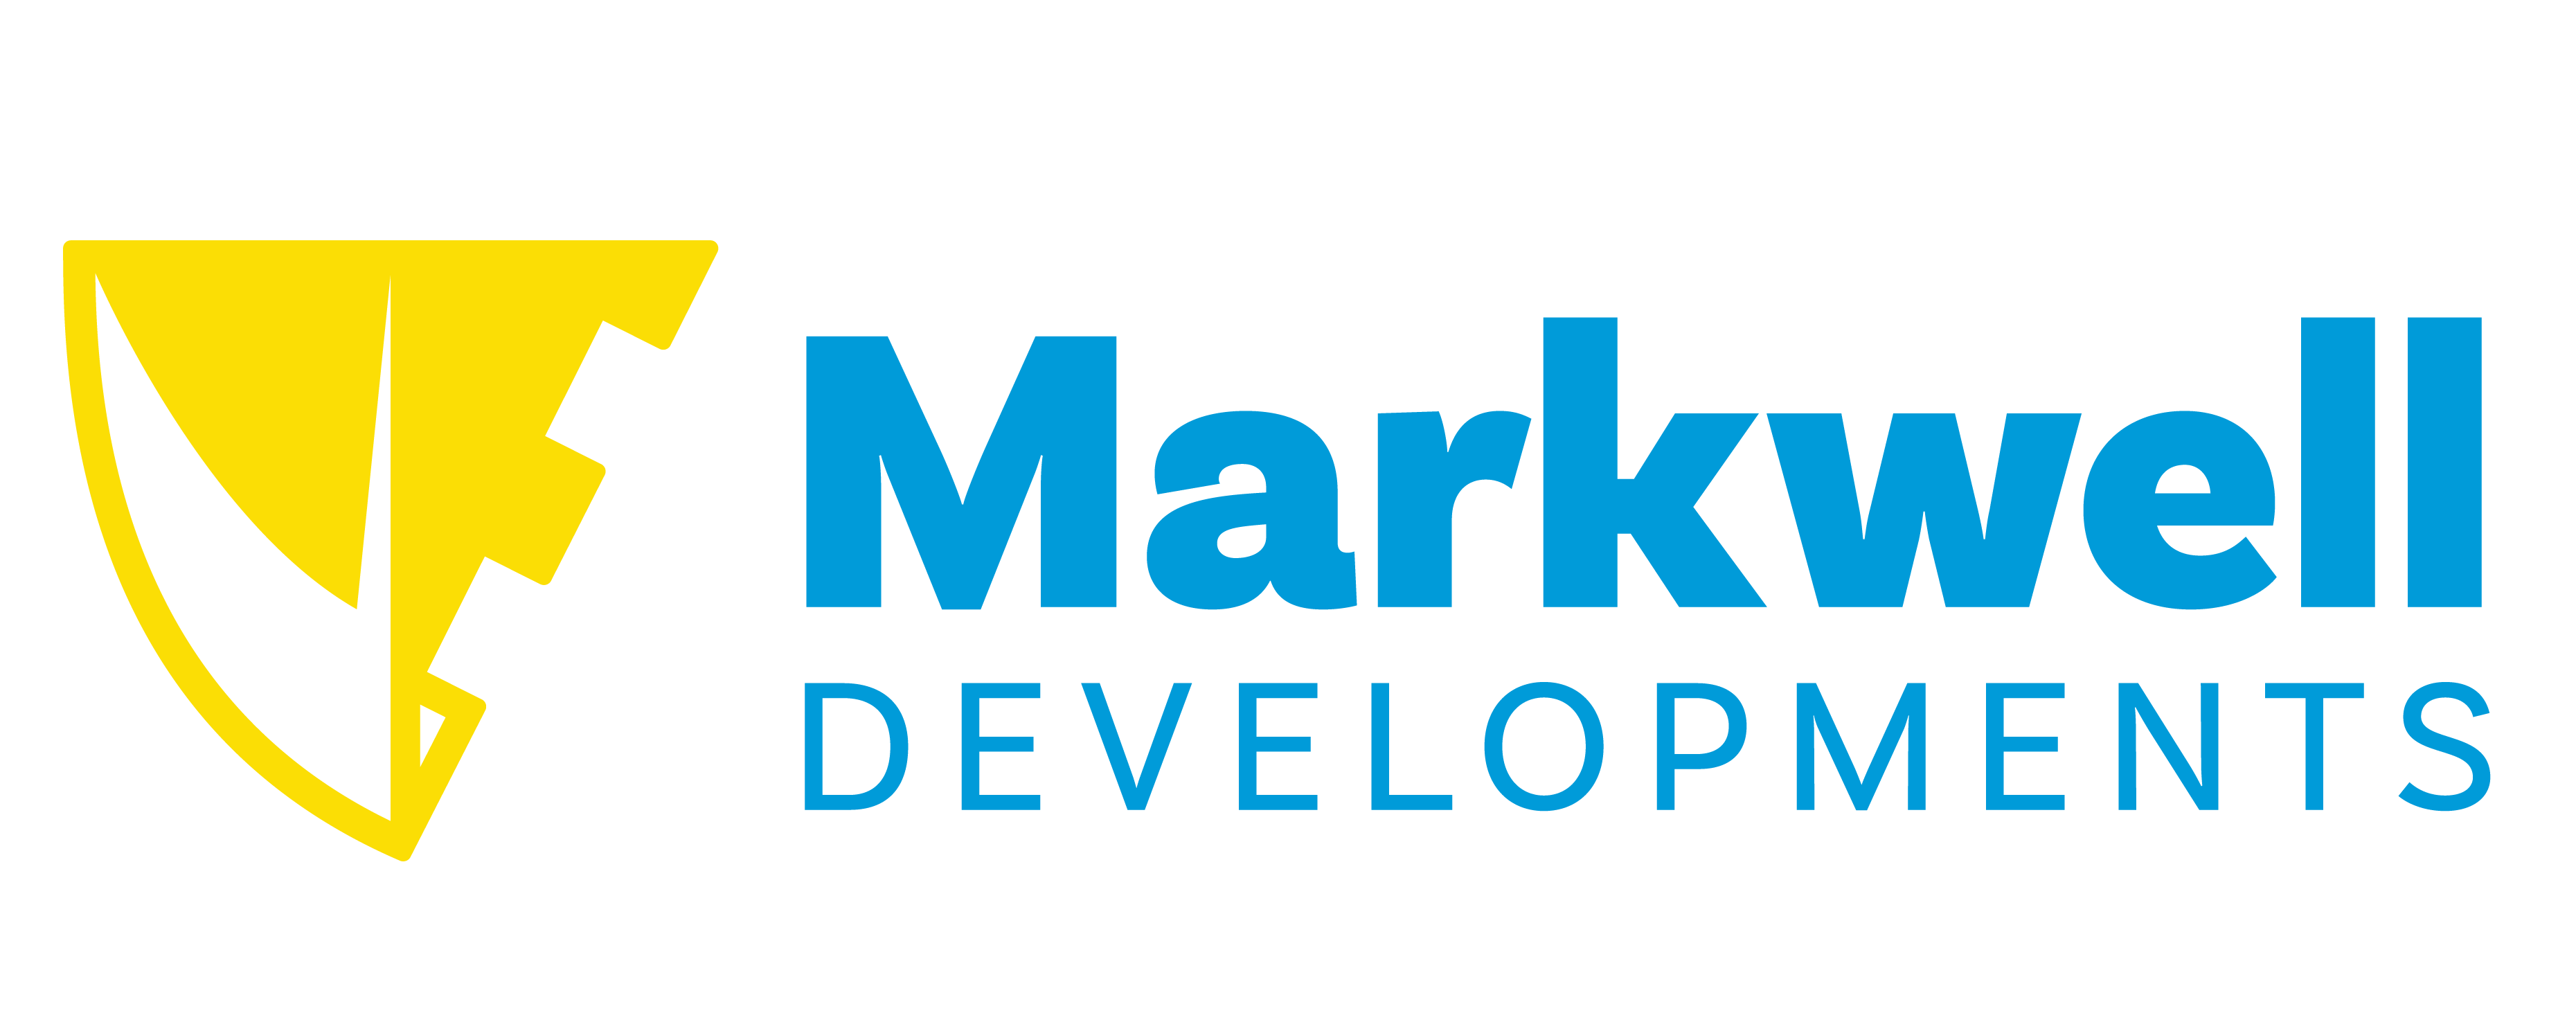 Markwell-Developments_Logo